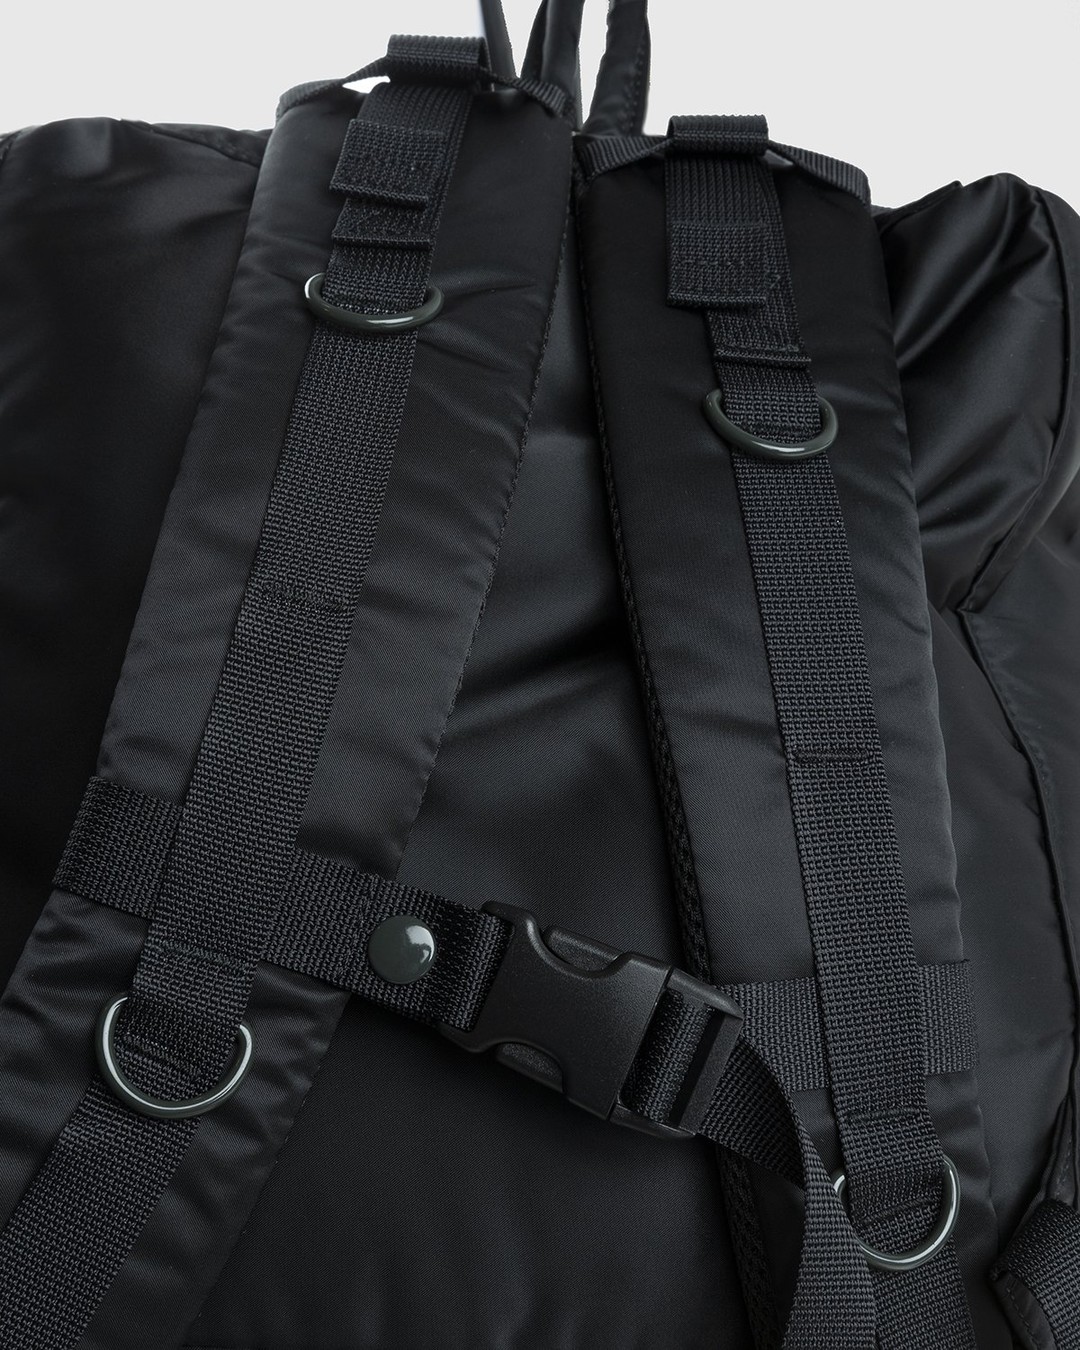 Porter-Yoshida & Co. – Rucksack Black - Bags - Black - Image 6